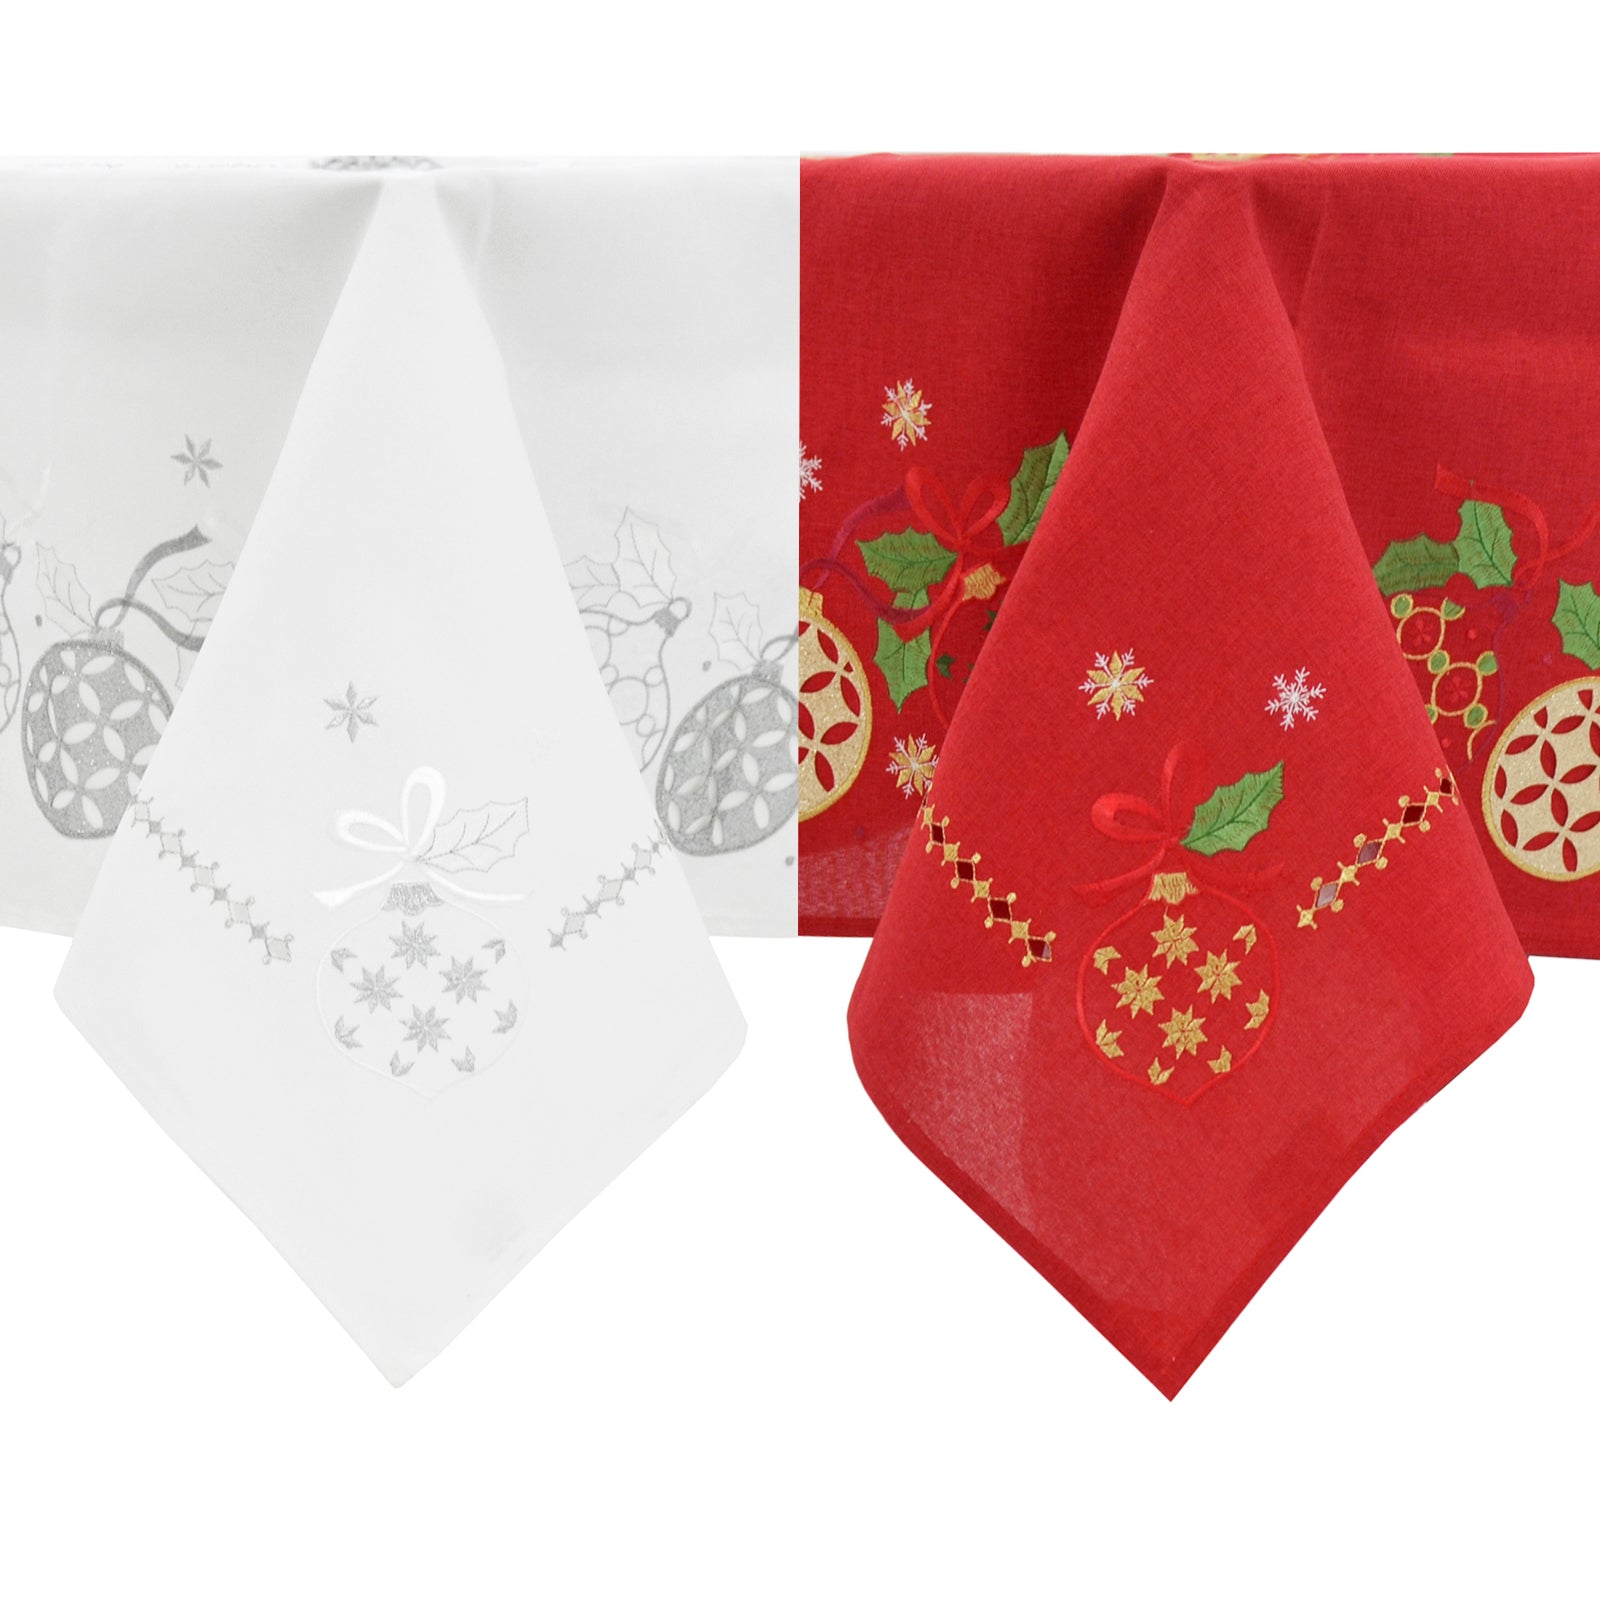 Mr Crimbo Christmas Baubles White Red Tablecloth Napkins - MrCrimbo.co.uk -XS6556 - White -christmas napkins